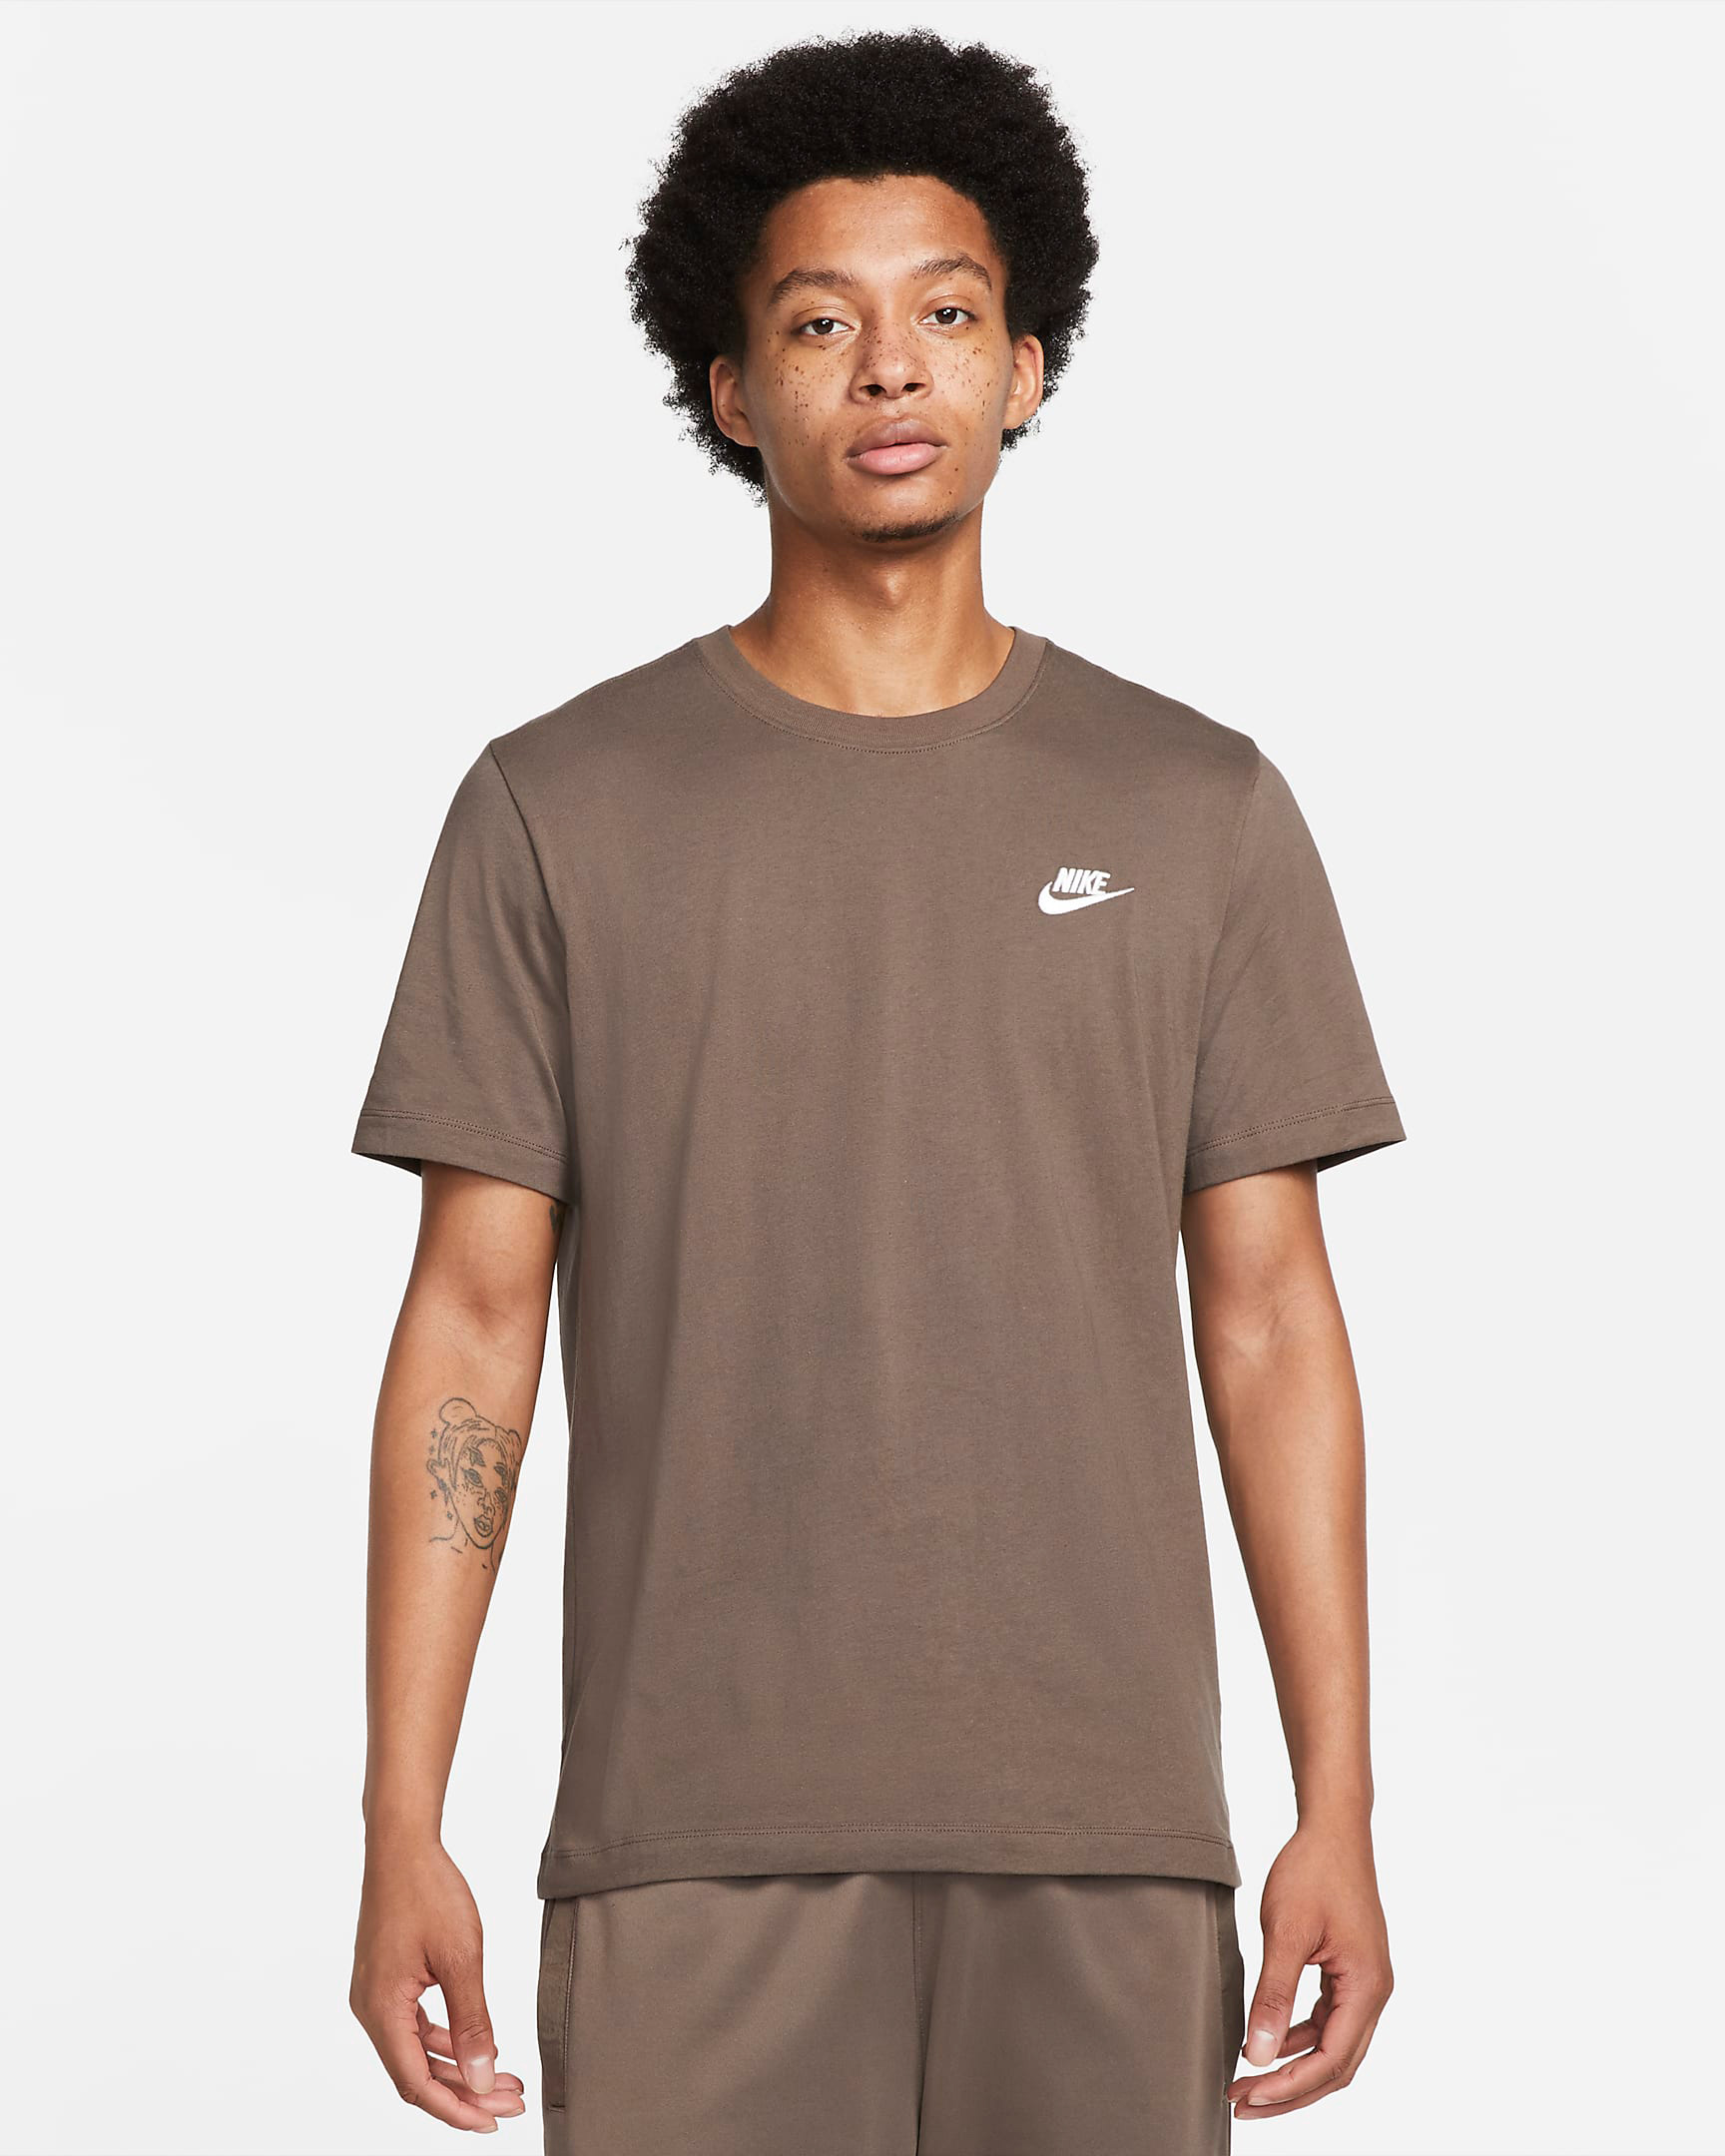 Nike Dunk High Light Chocolate Shirts Hats Clothing Outfits